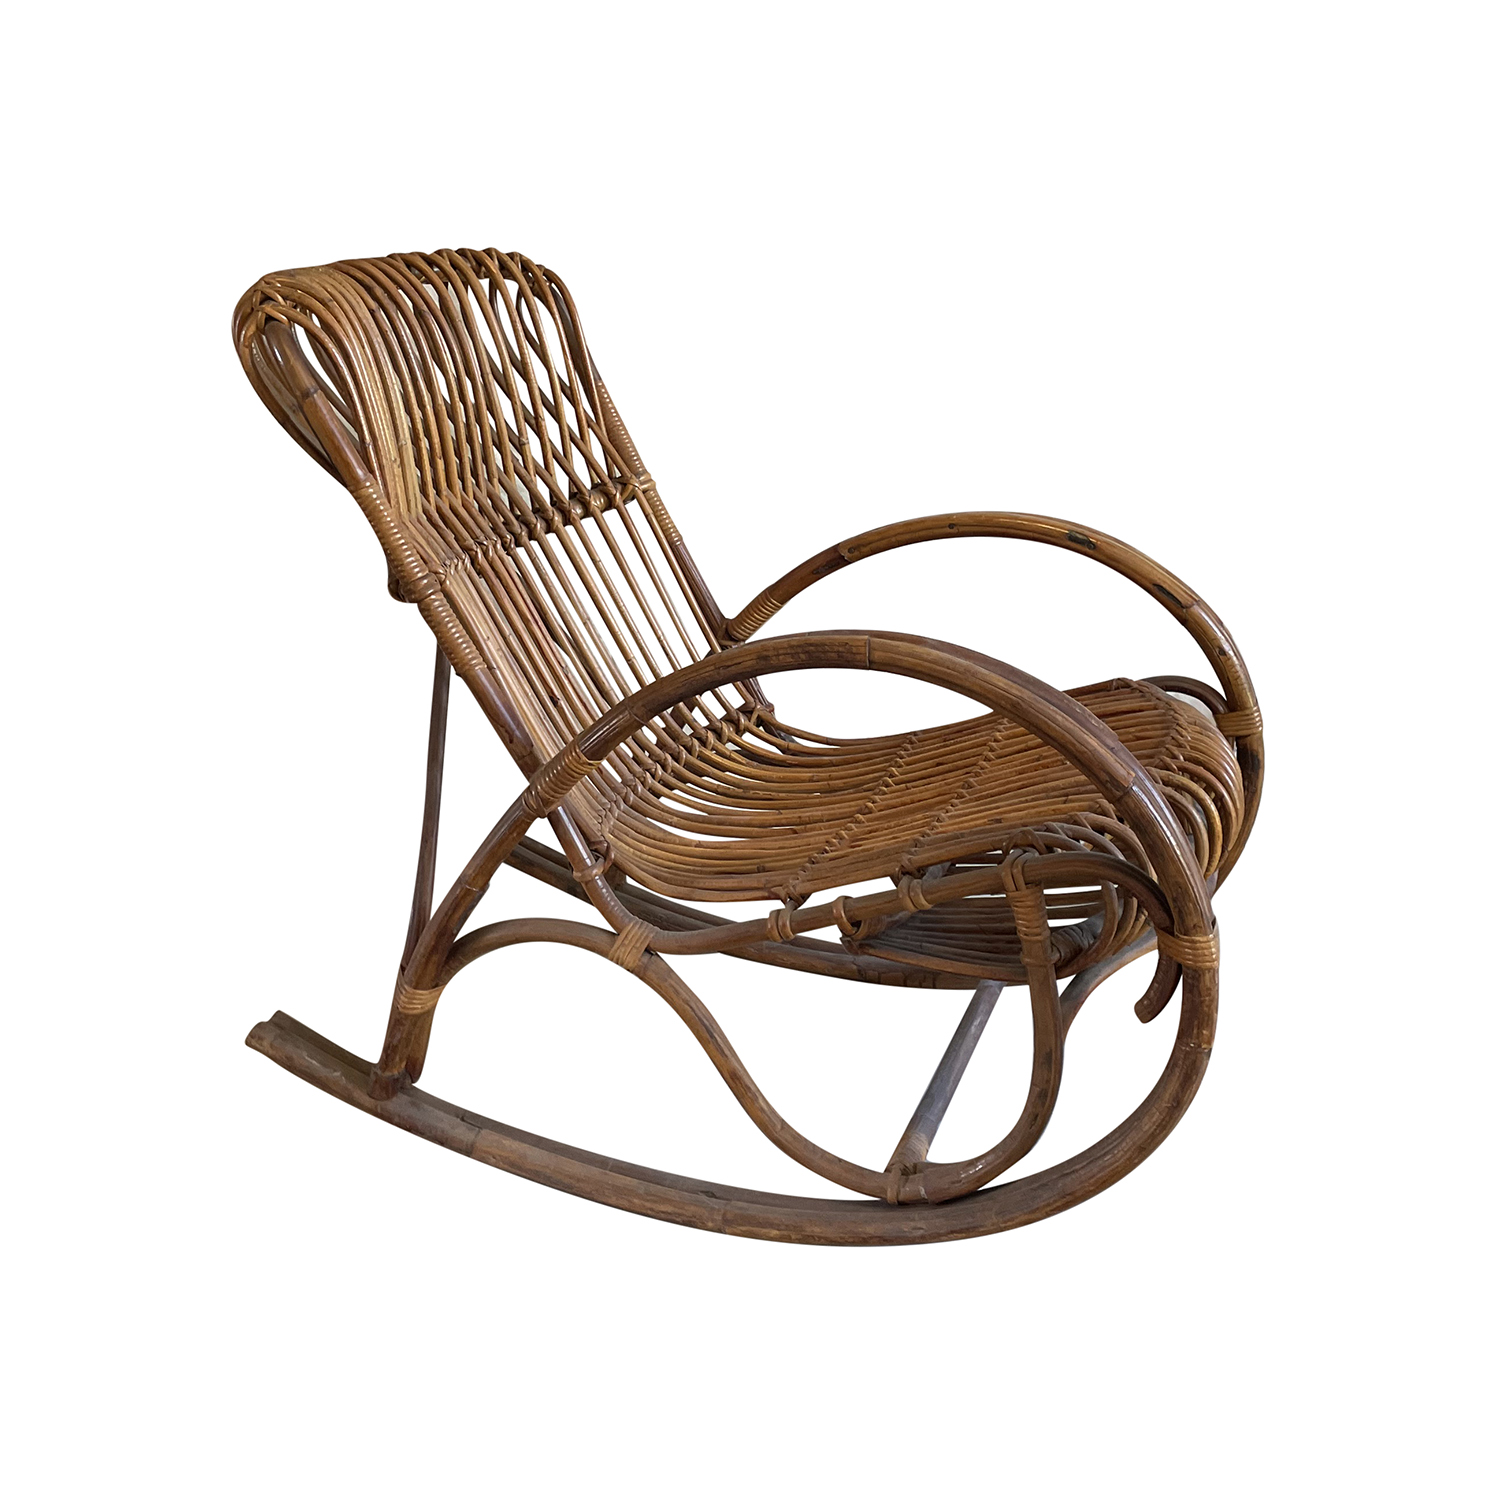 20th Century Italian Mid Century Rattan Rocking Chair – Vintage Lounge Chair